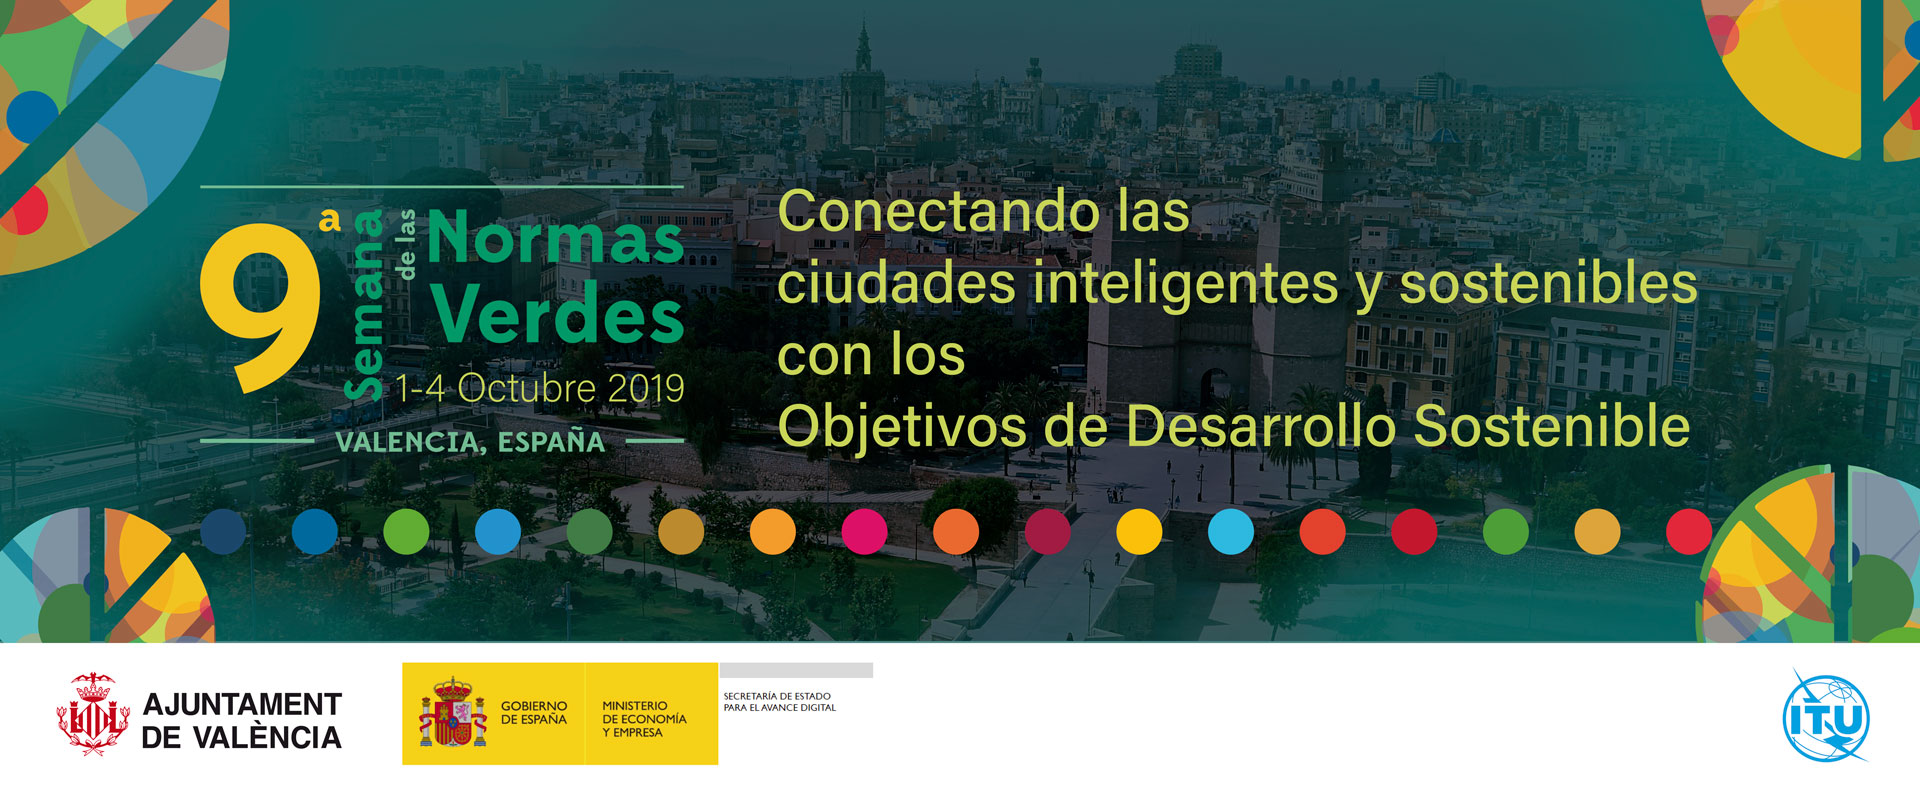 9a-semana-normas-verdes_ITU-Valencia-1-4-Octubre-2019_spanish(2).jpg